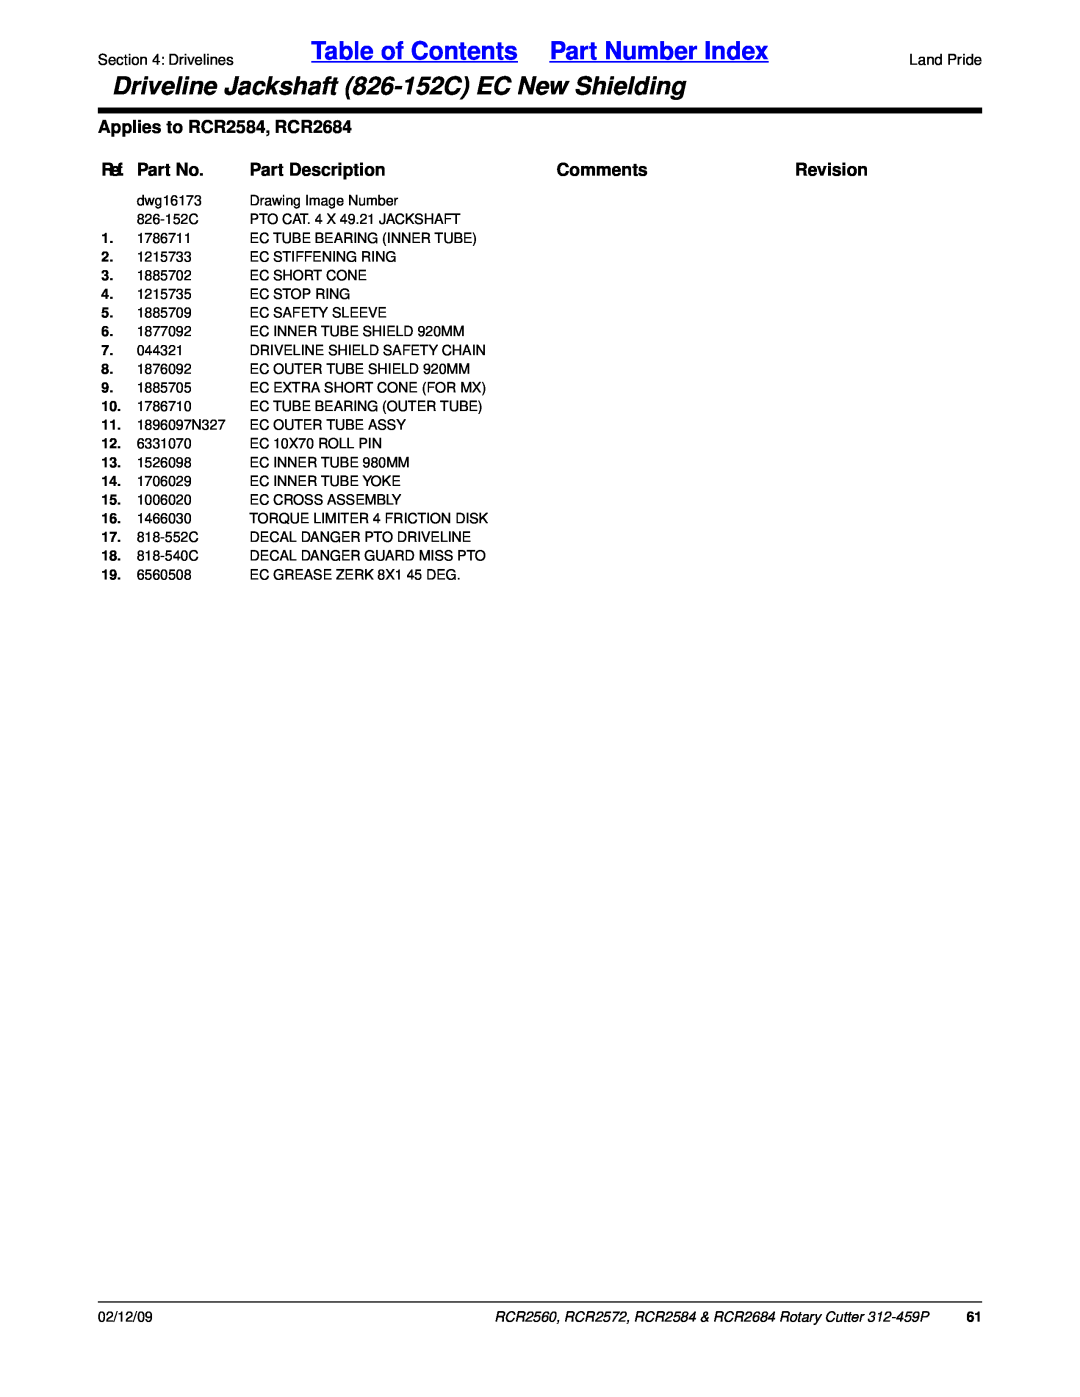 Land Pride RCR2584 manual Table of Contents Part Number Index, Driveline Jackshaft 826-152CEC New Shielding, Ref. Part No 